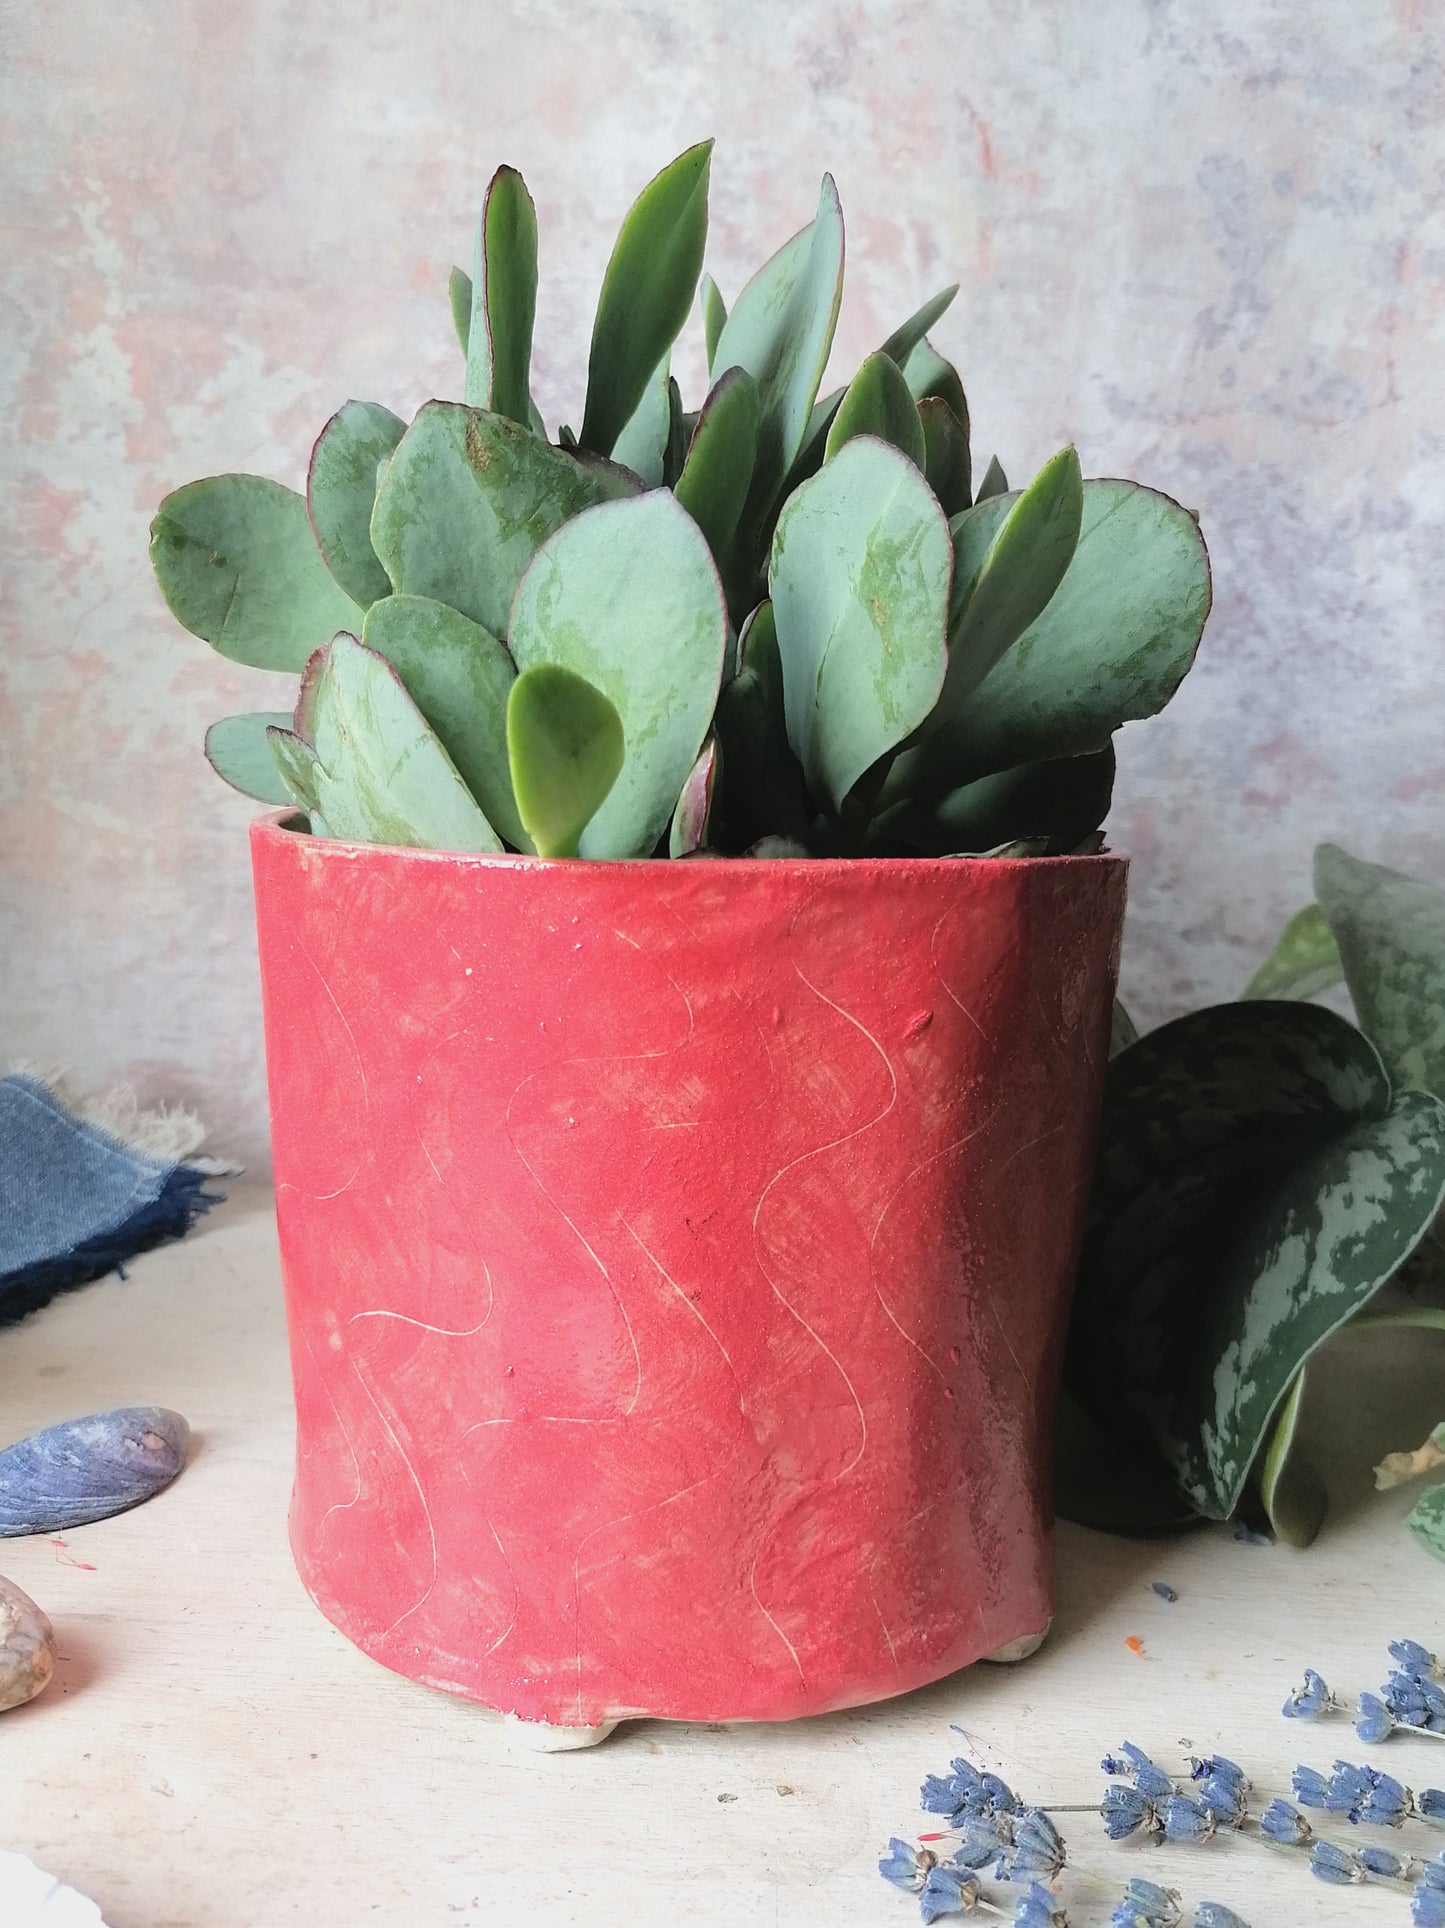 Pertunia the handmade ceramic plant pot